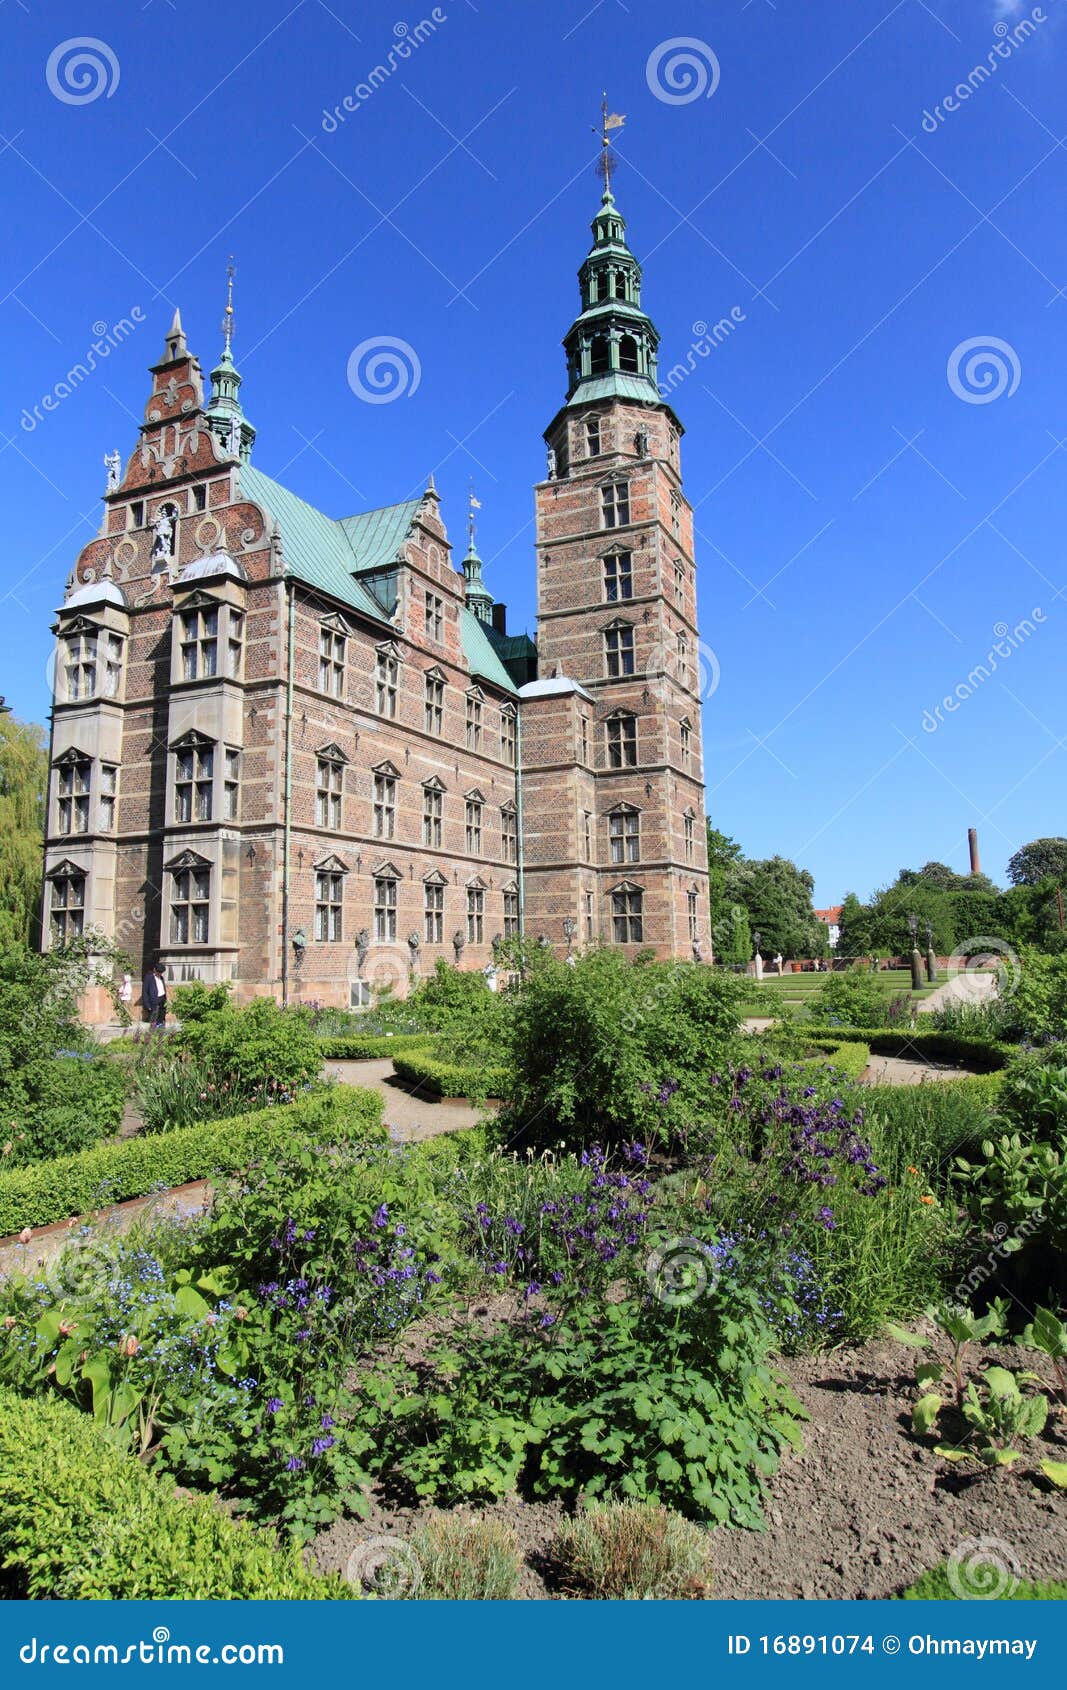 Rosenborg Castle And Garden Stock Photo - Image of architecture